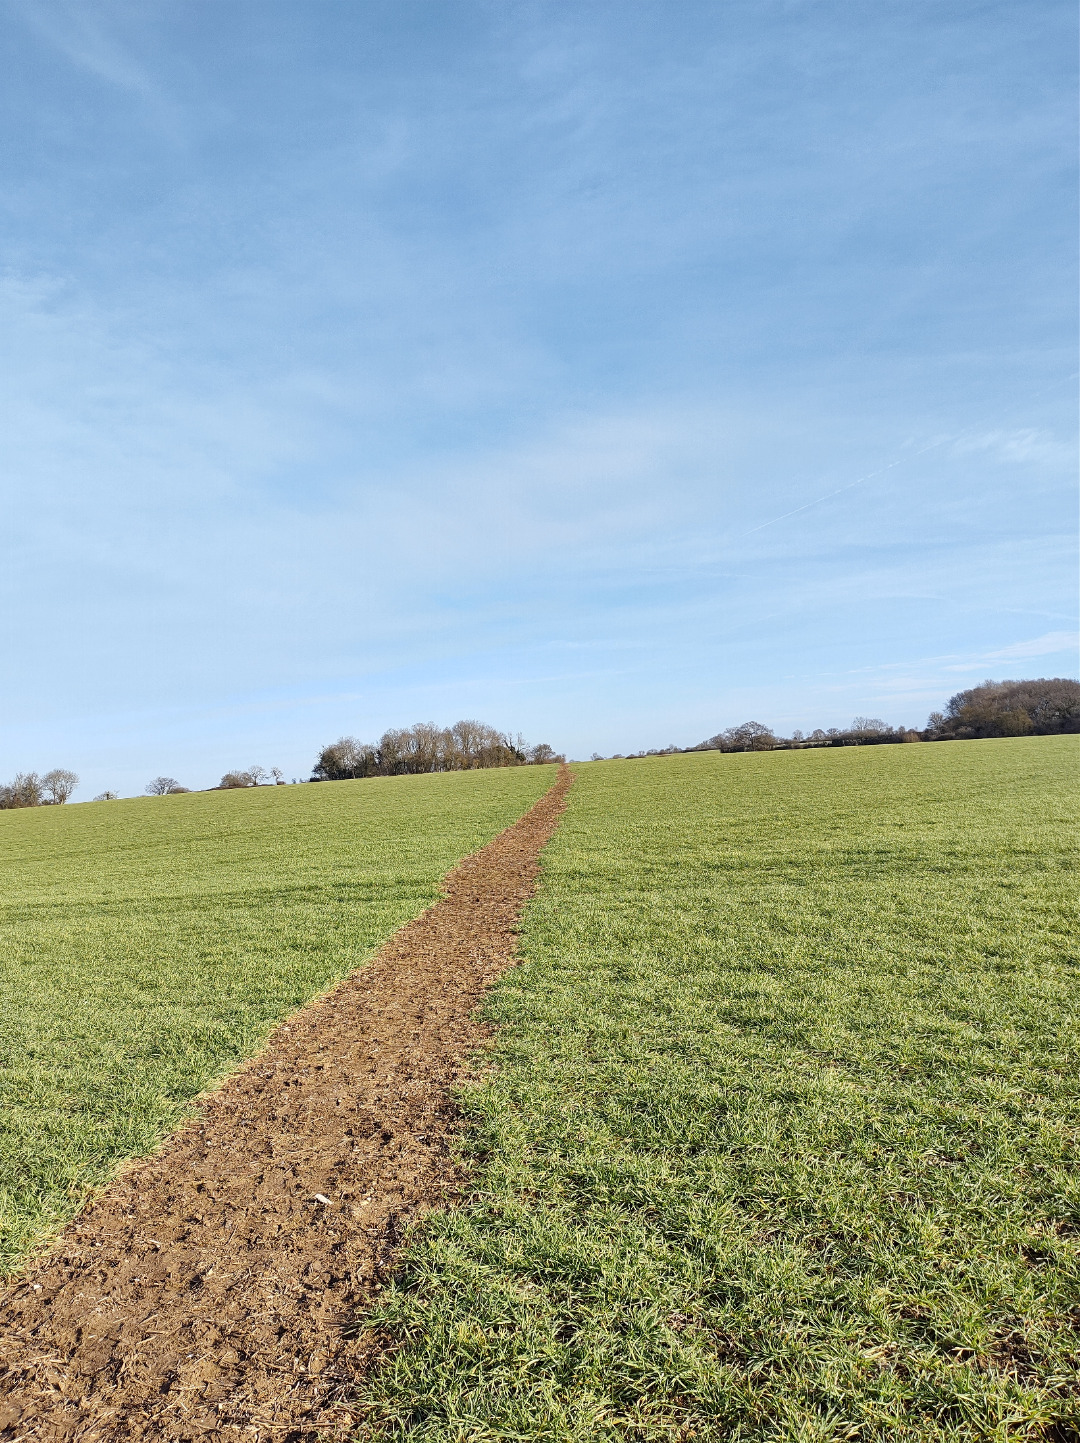 Public Footpaths In The UK Through Fields Are Desire Highways